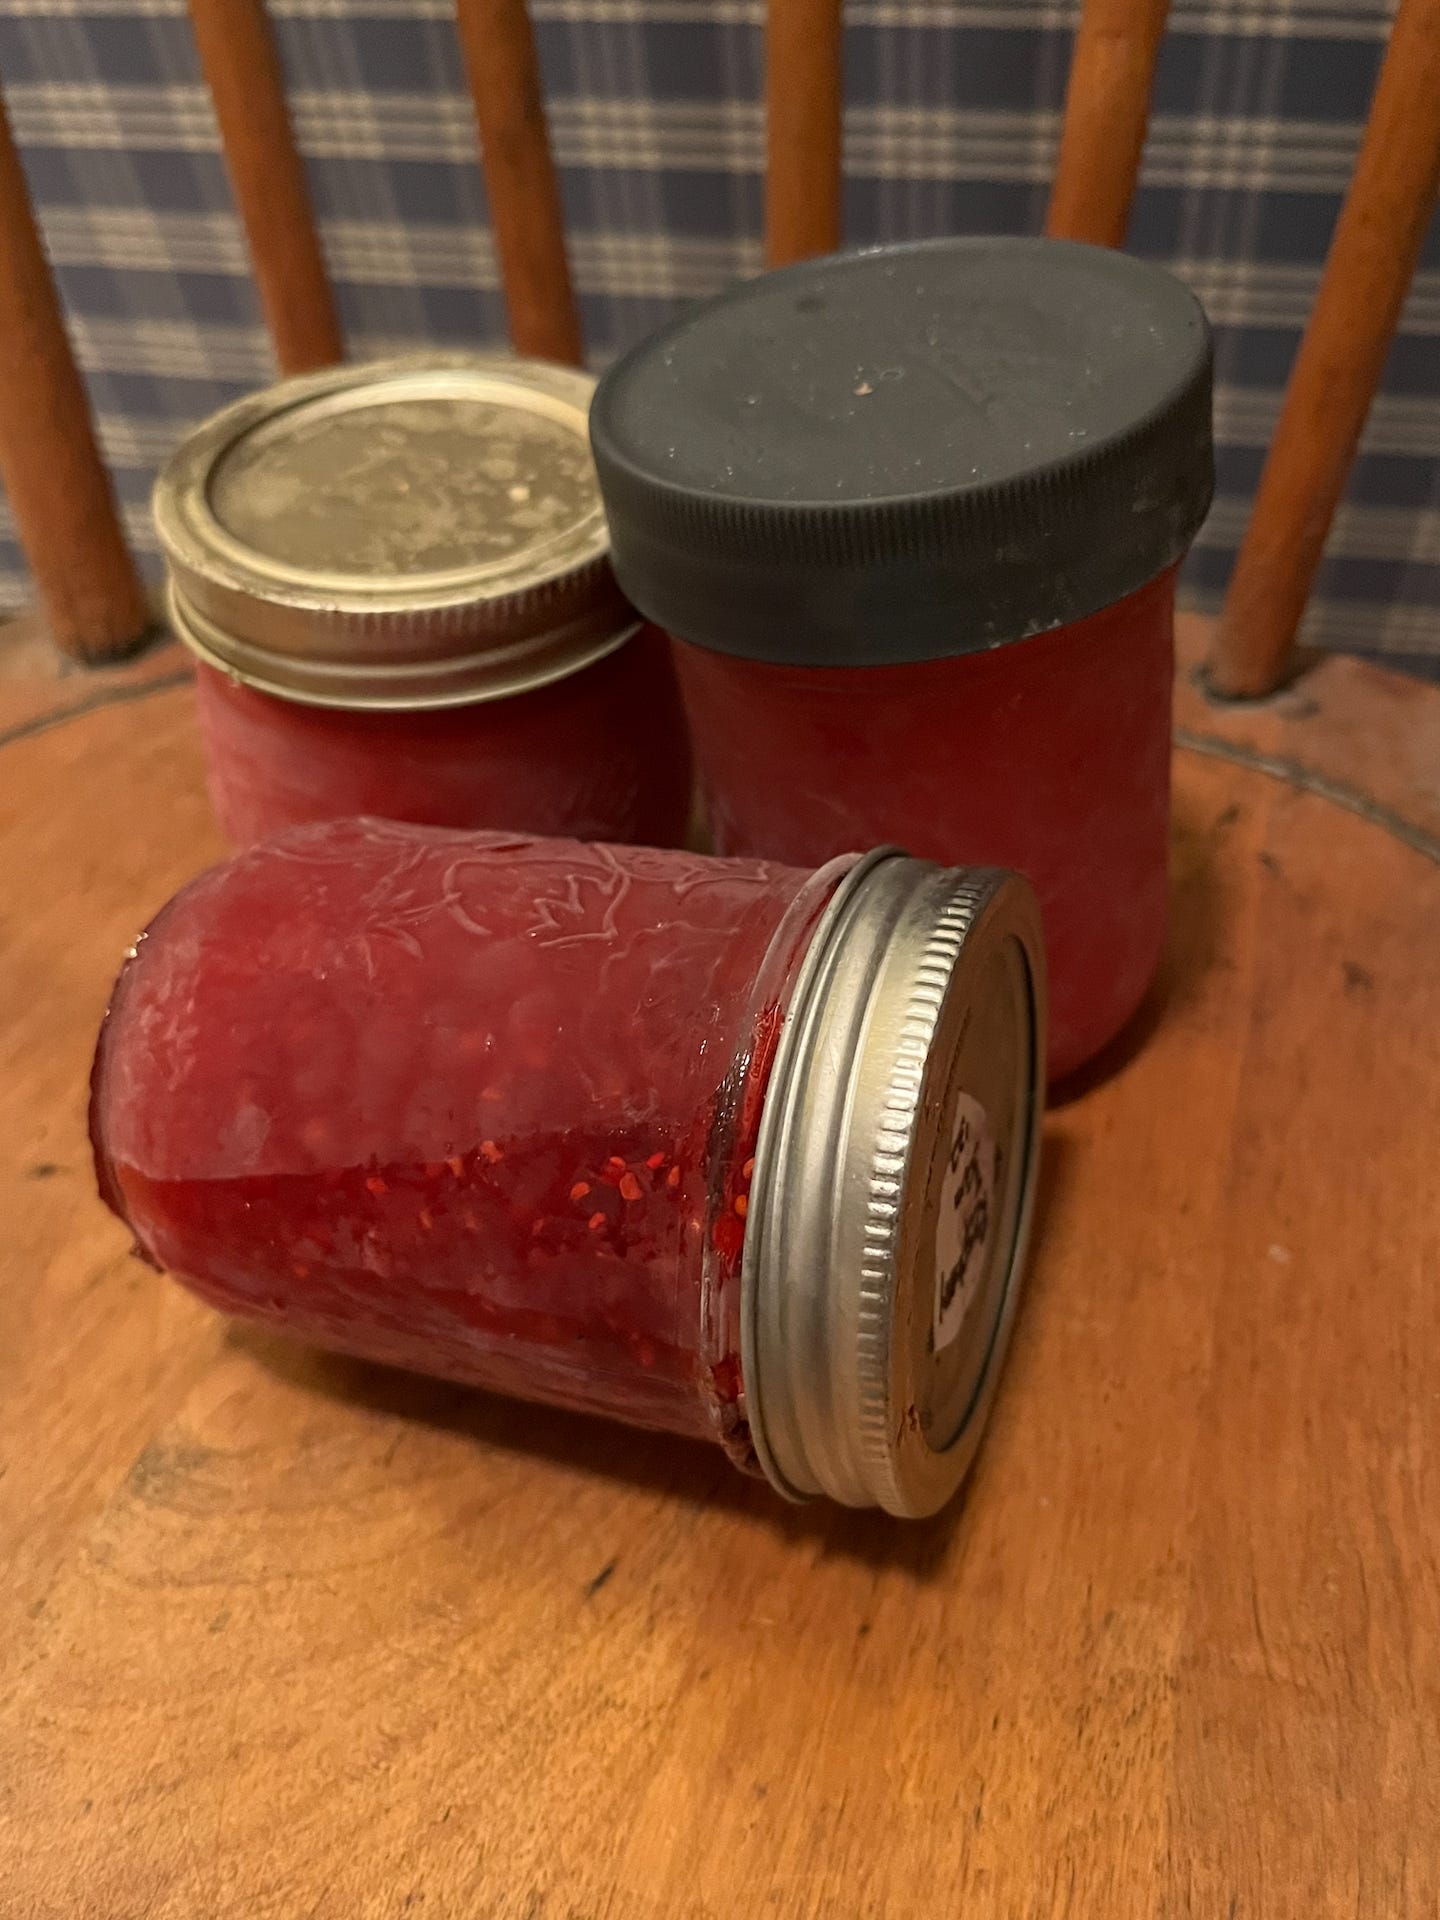 Three jars of a raspberry jam